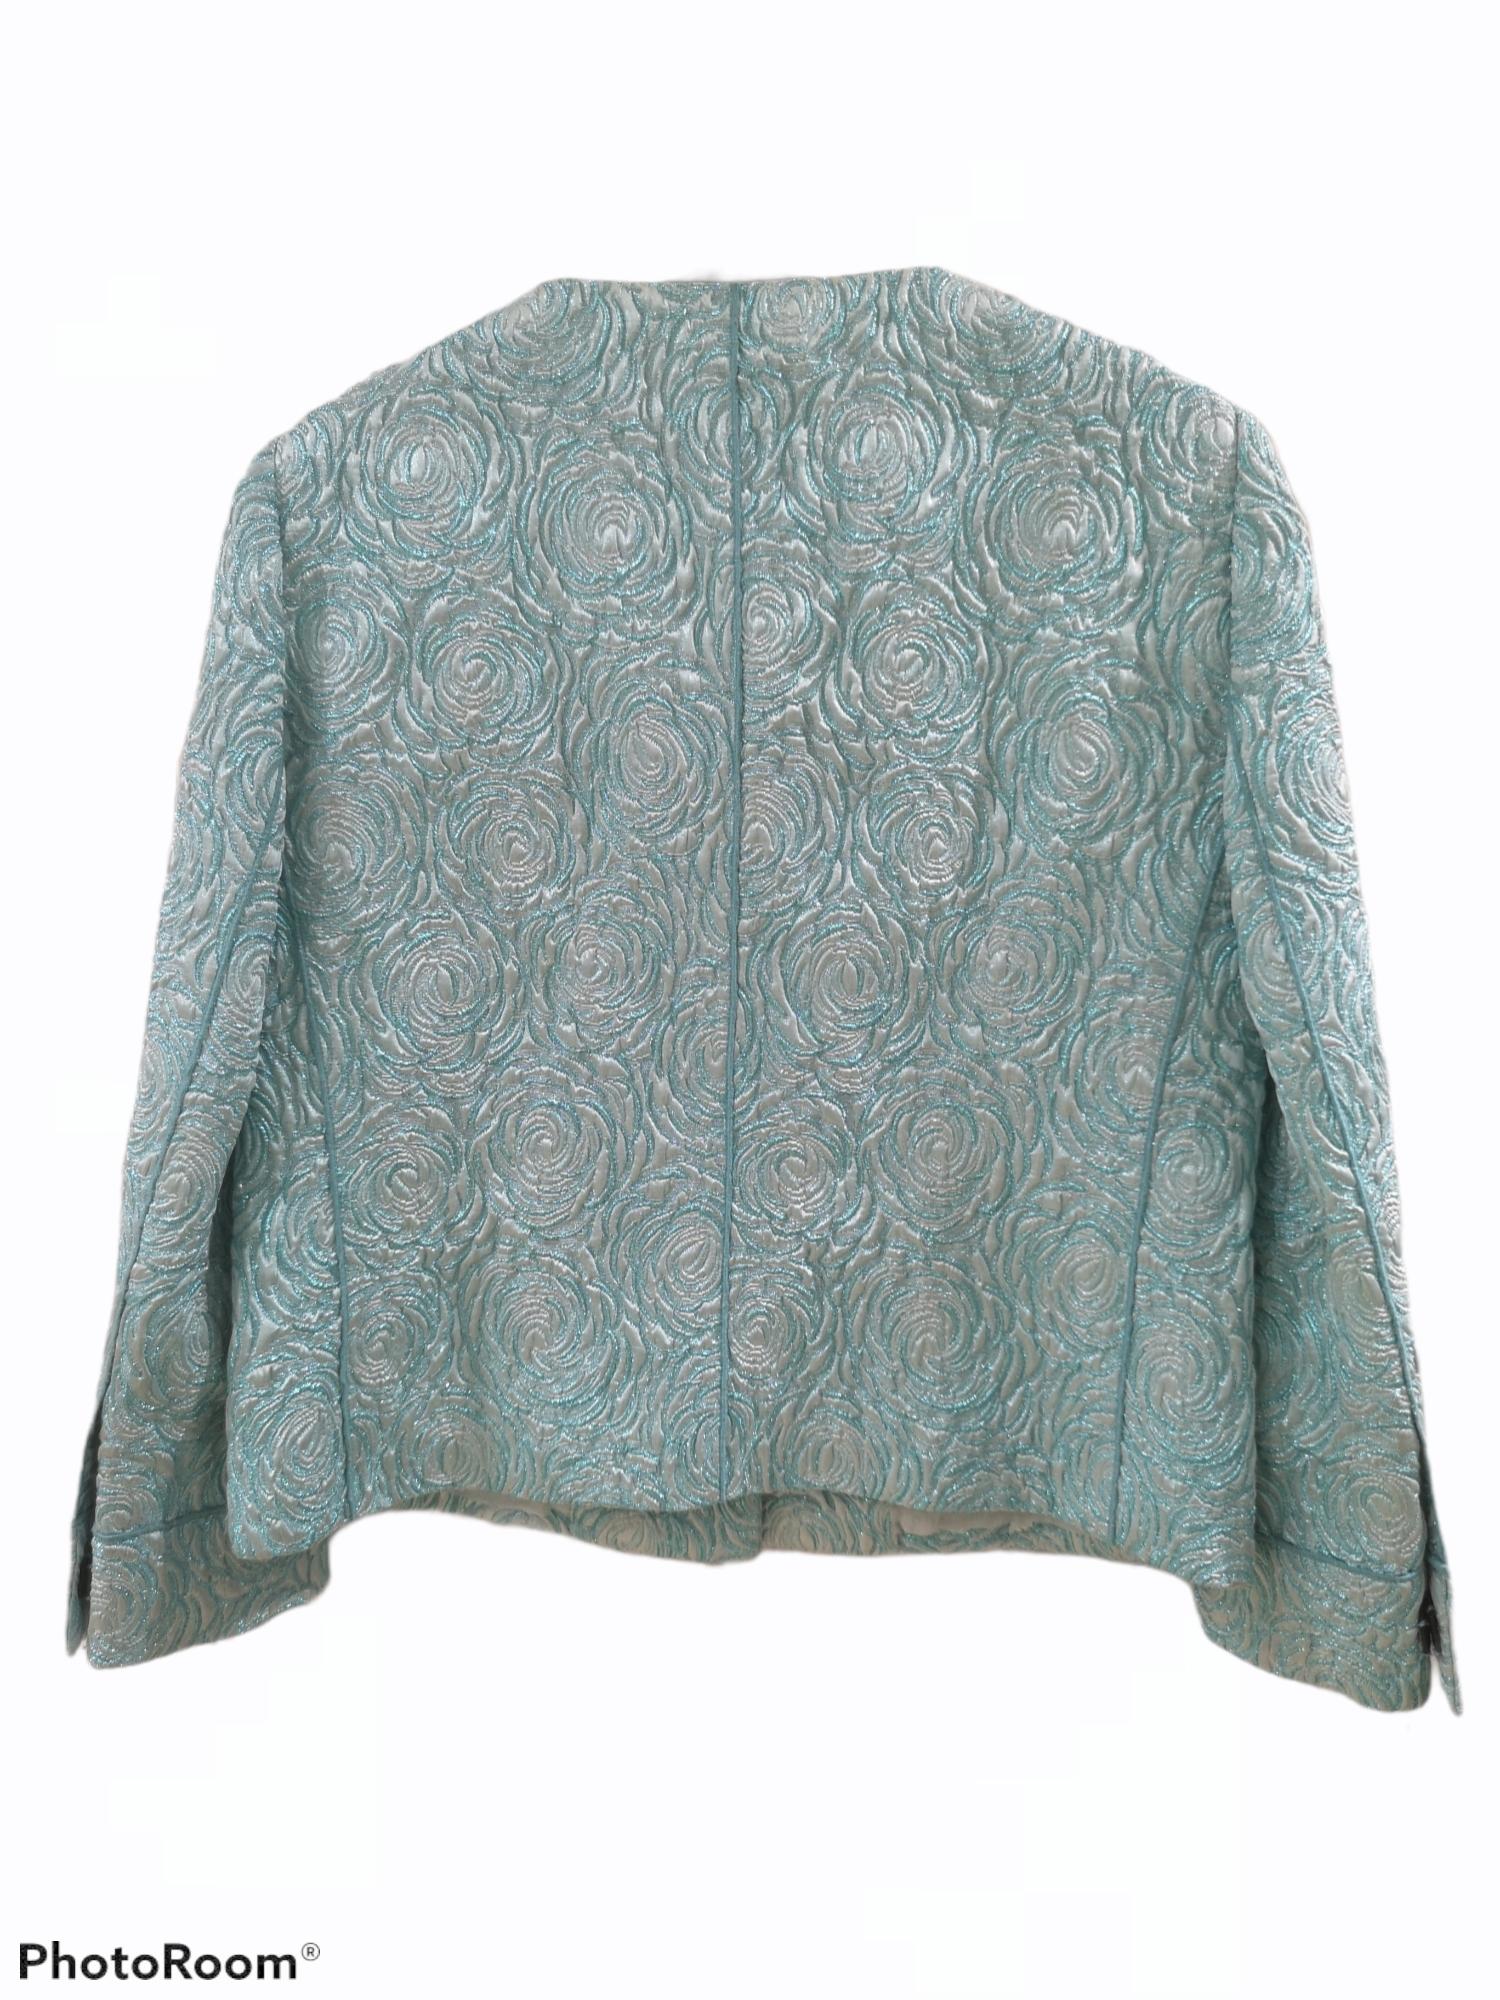 Women's Dolce & Gabbana turquoise wool jacket 